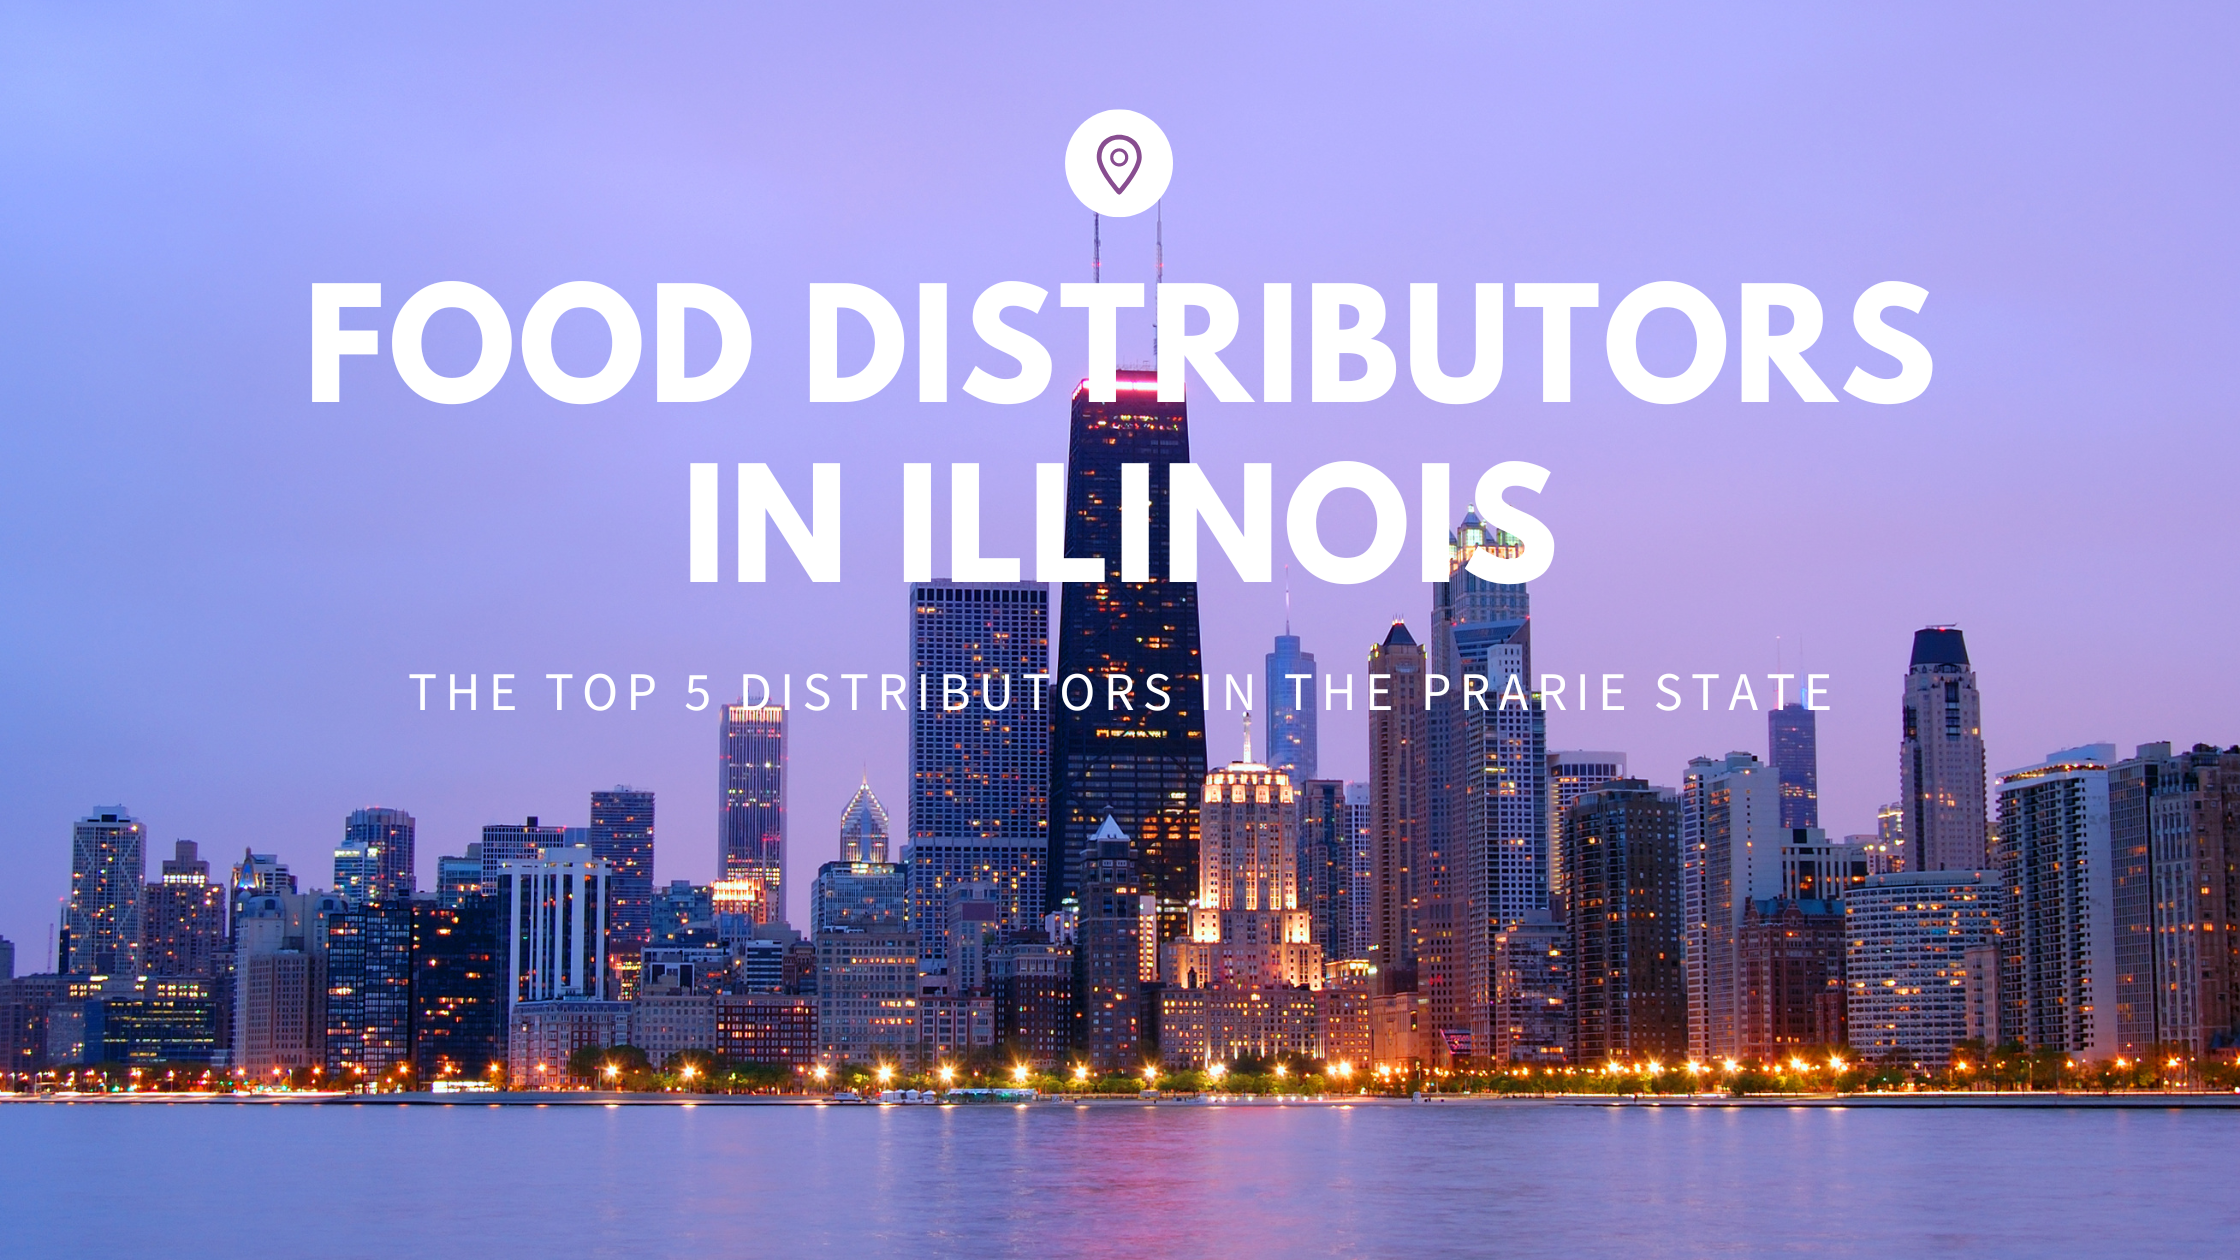 Food distributors in Illinois